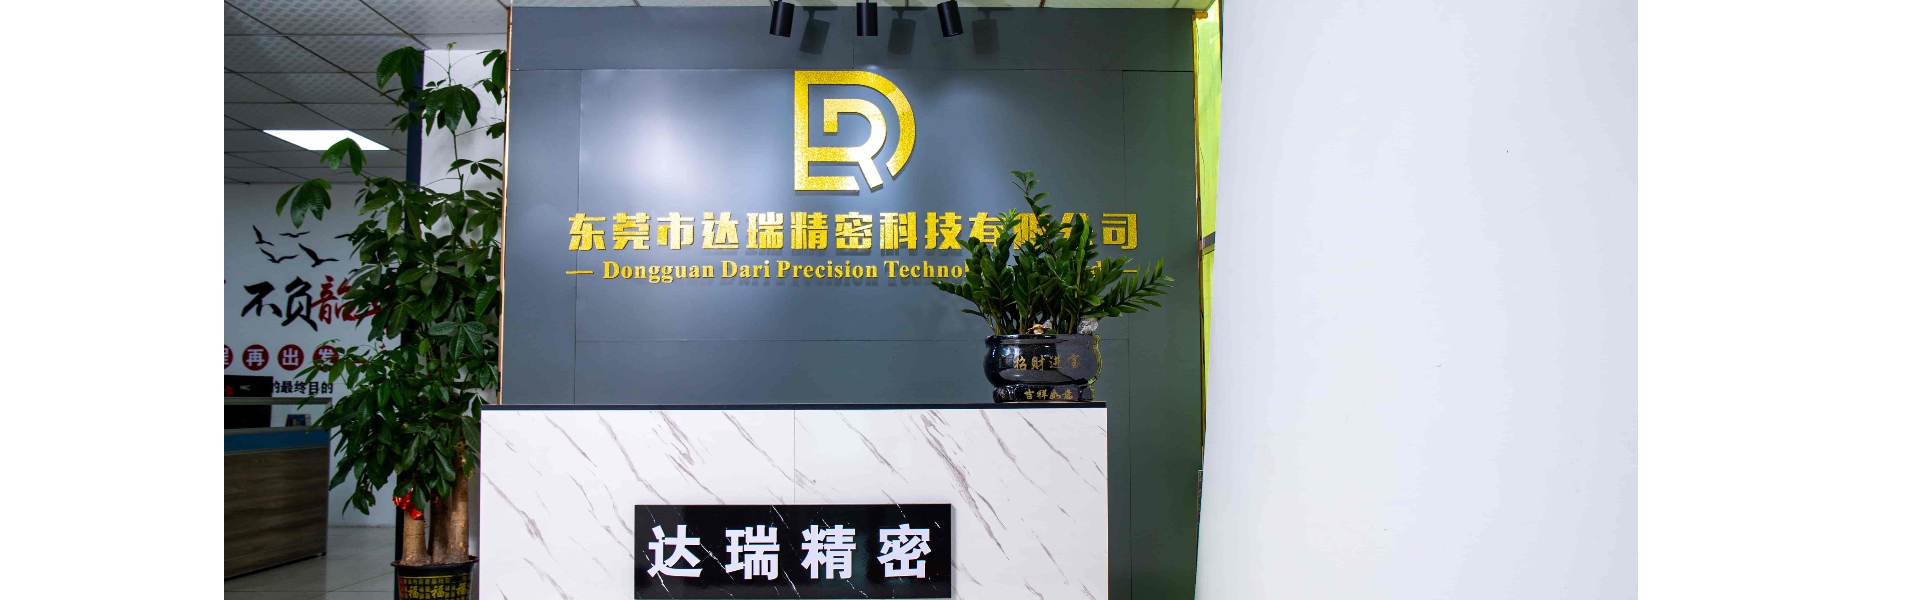 Kunststoffform, Spritzguss, Kunststoffhülle,Dongguan Darui Precision Technology Co., Ltd.